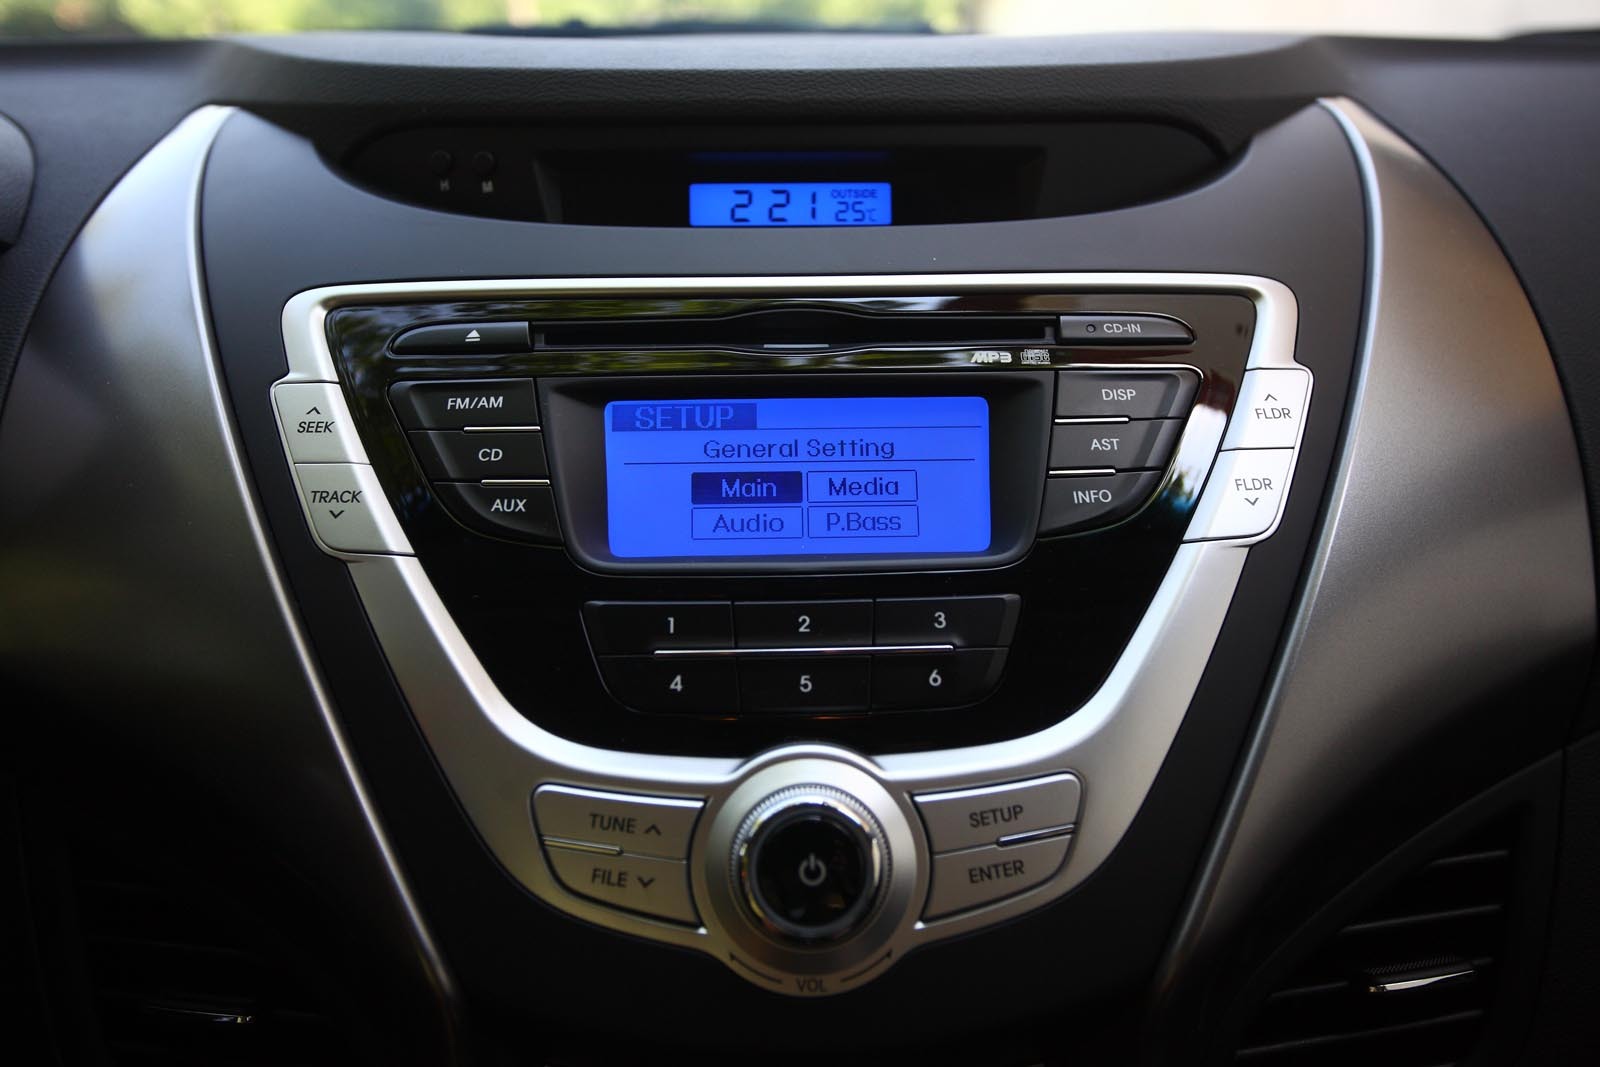 In Hyundai Elantra, butoanele sunt mari si ergonomic plasate, iar displayurile lizibile